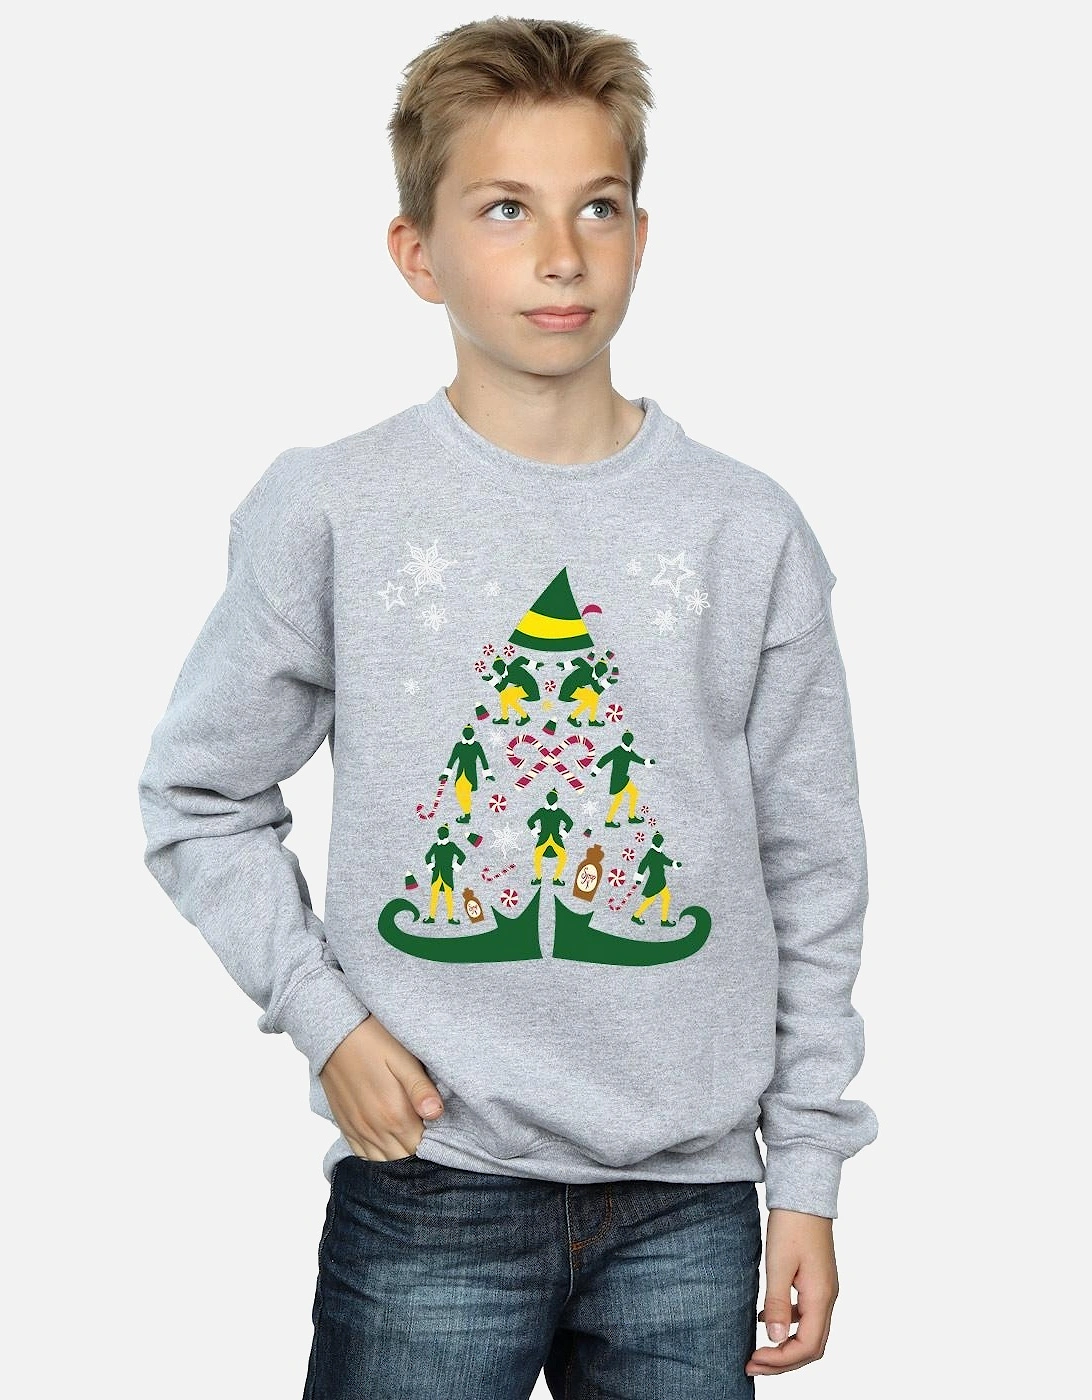 Boys Christmas Tree Sweatshirt